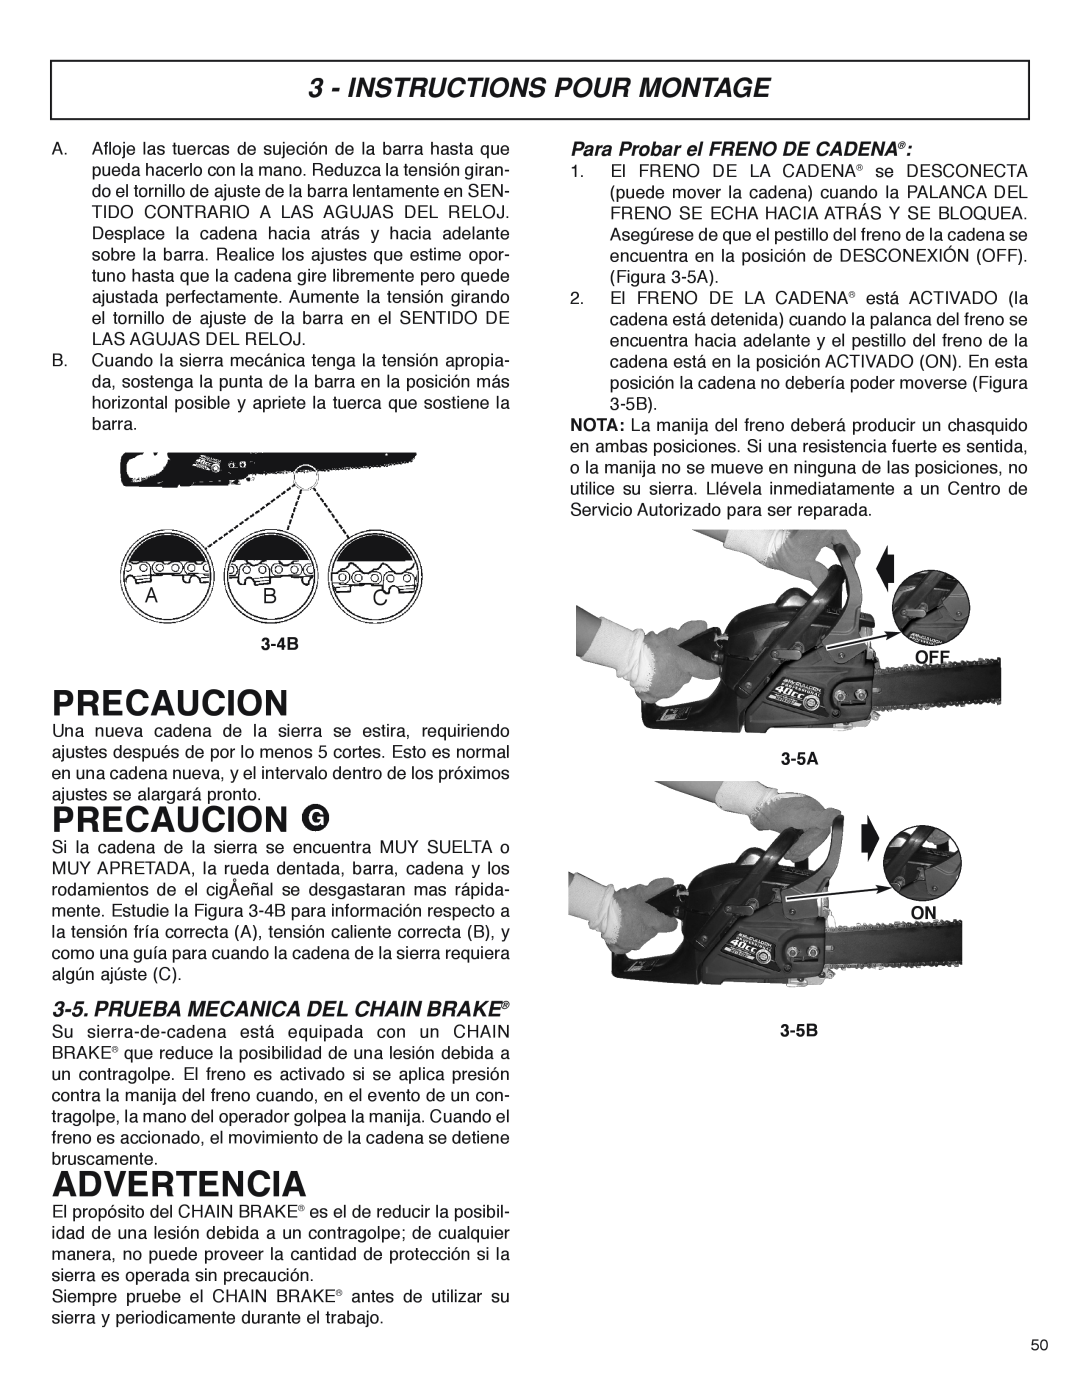 McCulloch MS4016PAVCC, MS4018PAVCC Precaucion, Prueba Mecanica Del Chain Brake, Para Probar el FRENO DE CADENA, A B C 